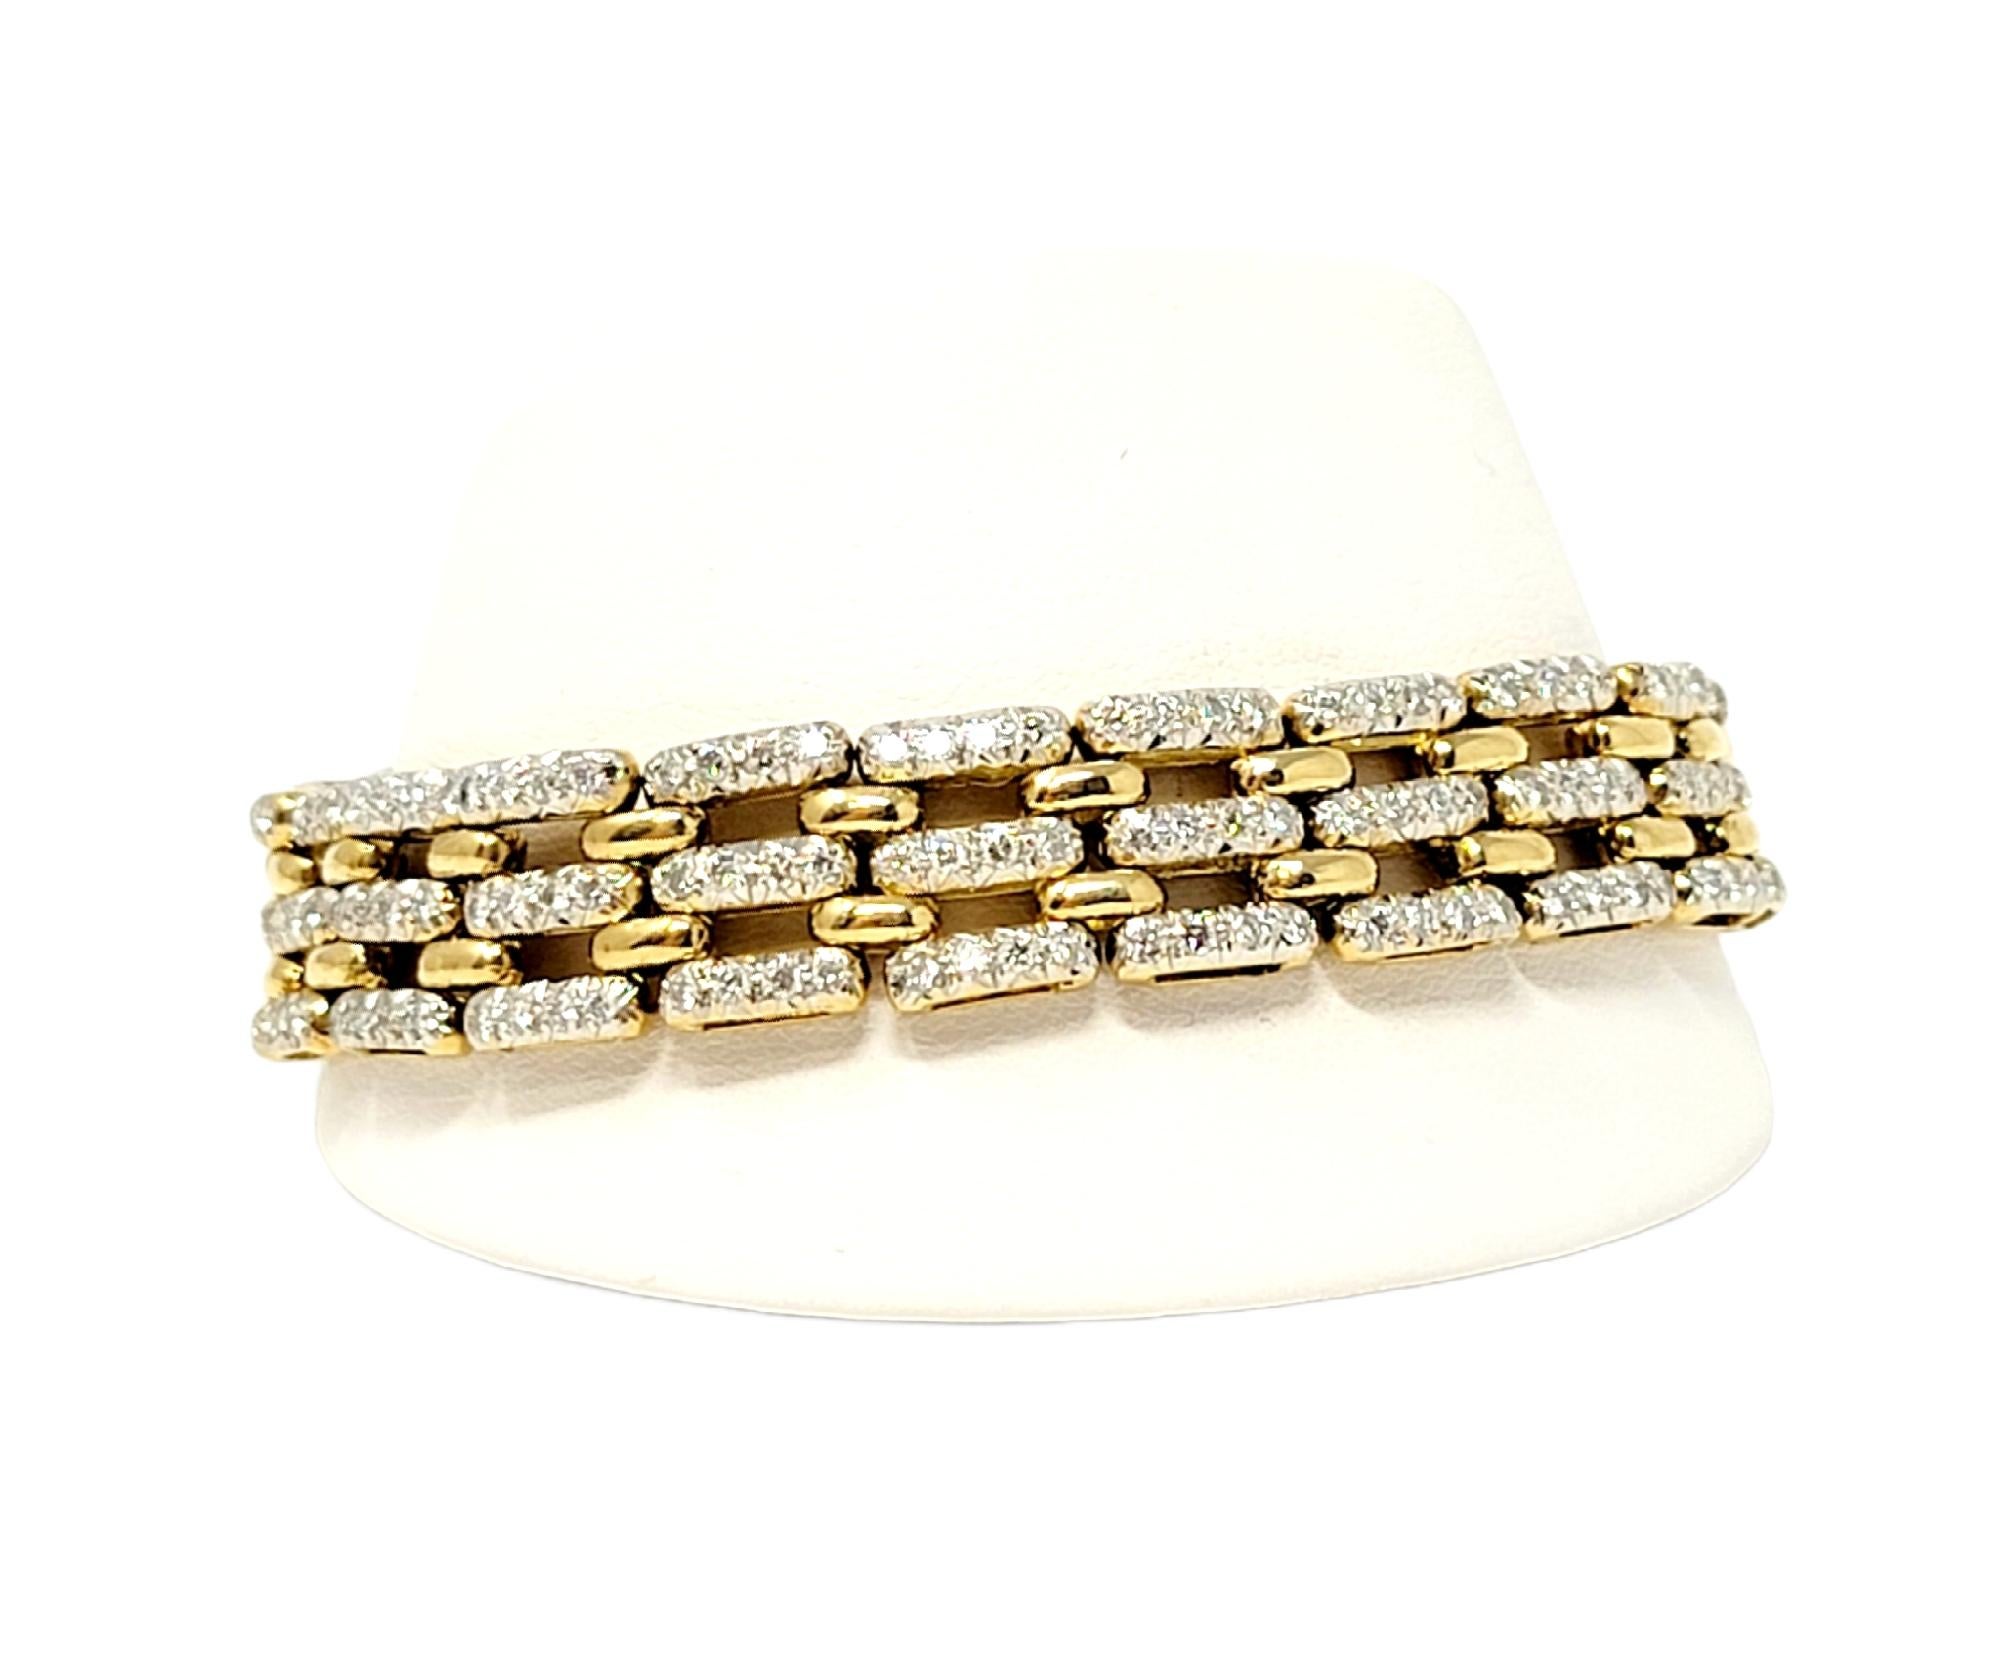 Gorgeous glittering diamond bracelet looks elegant and sophisticated on the wrist. This 1/2